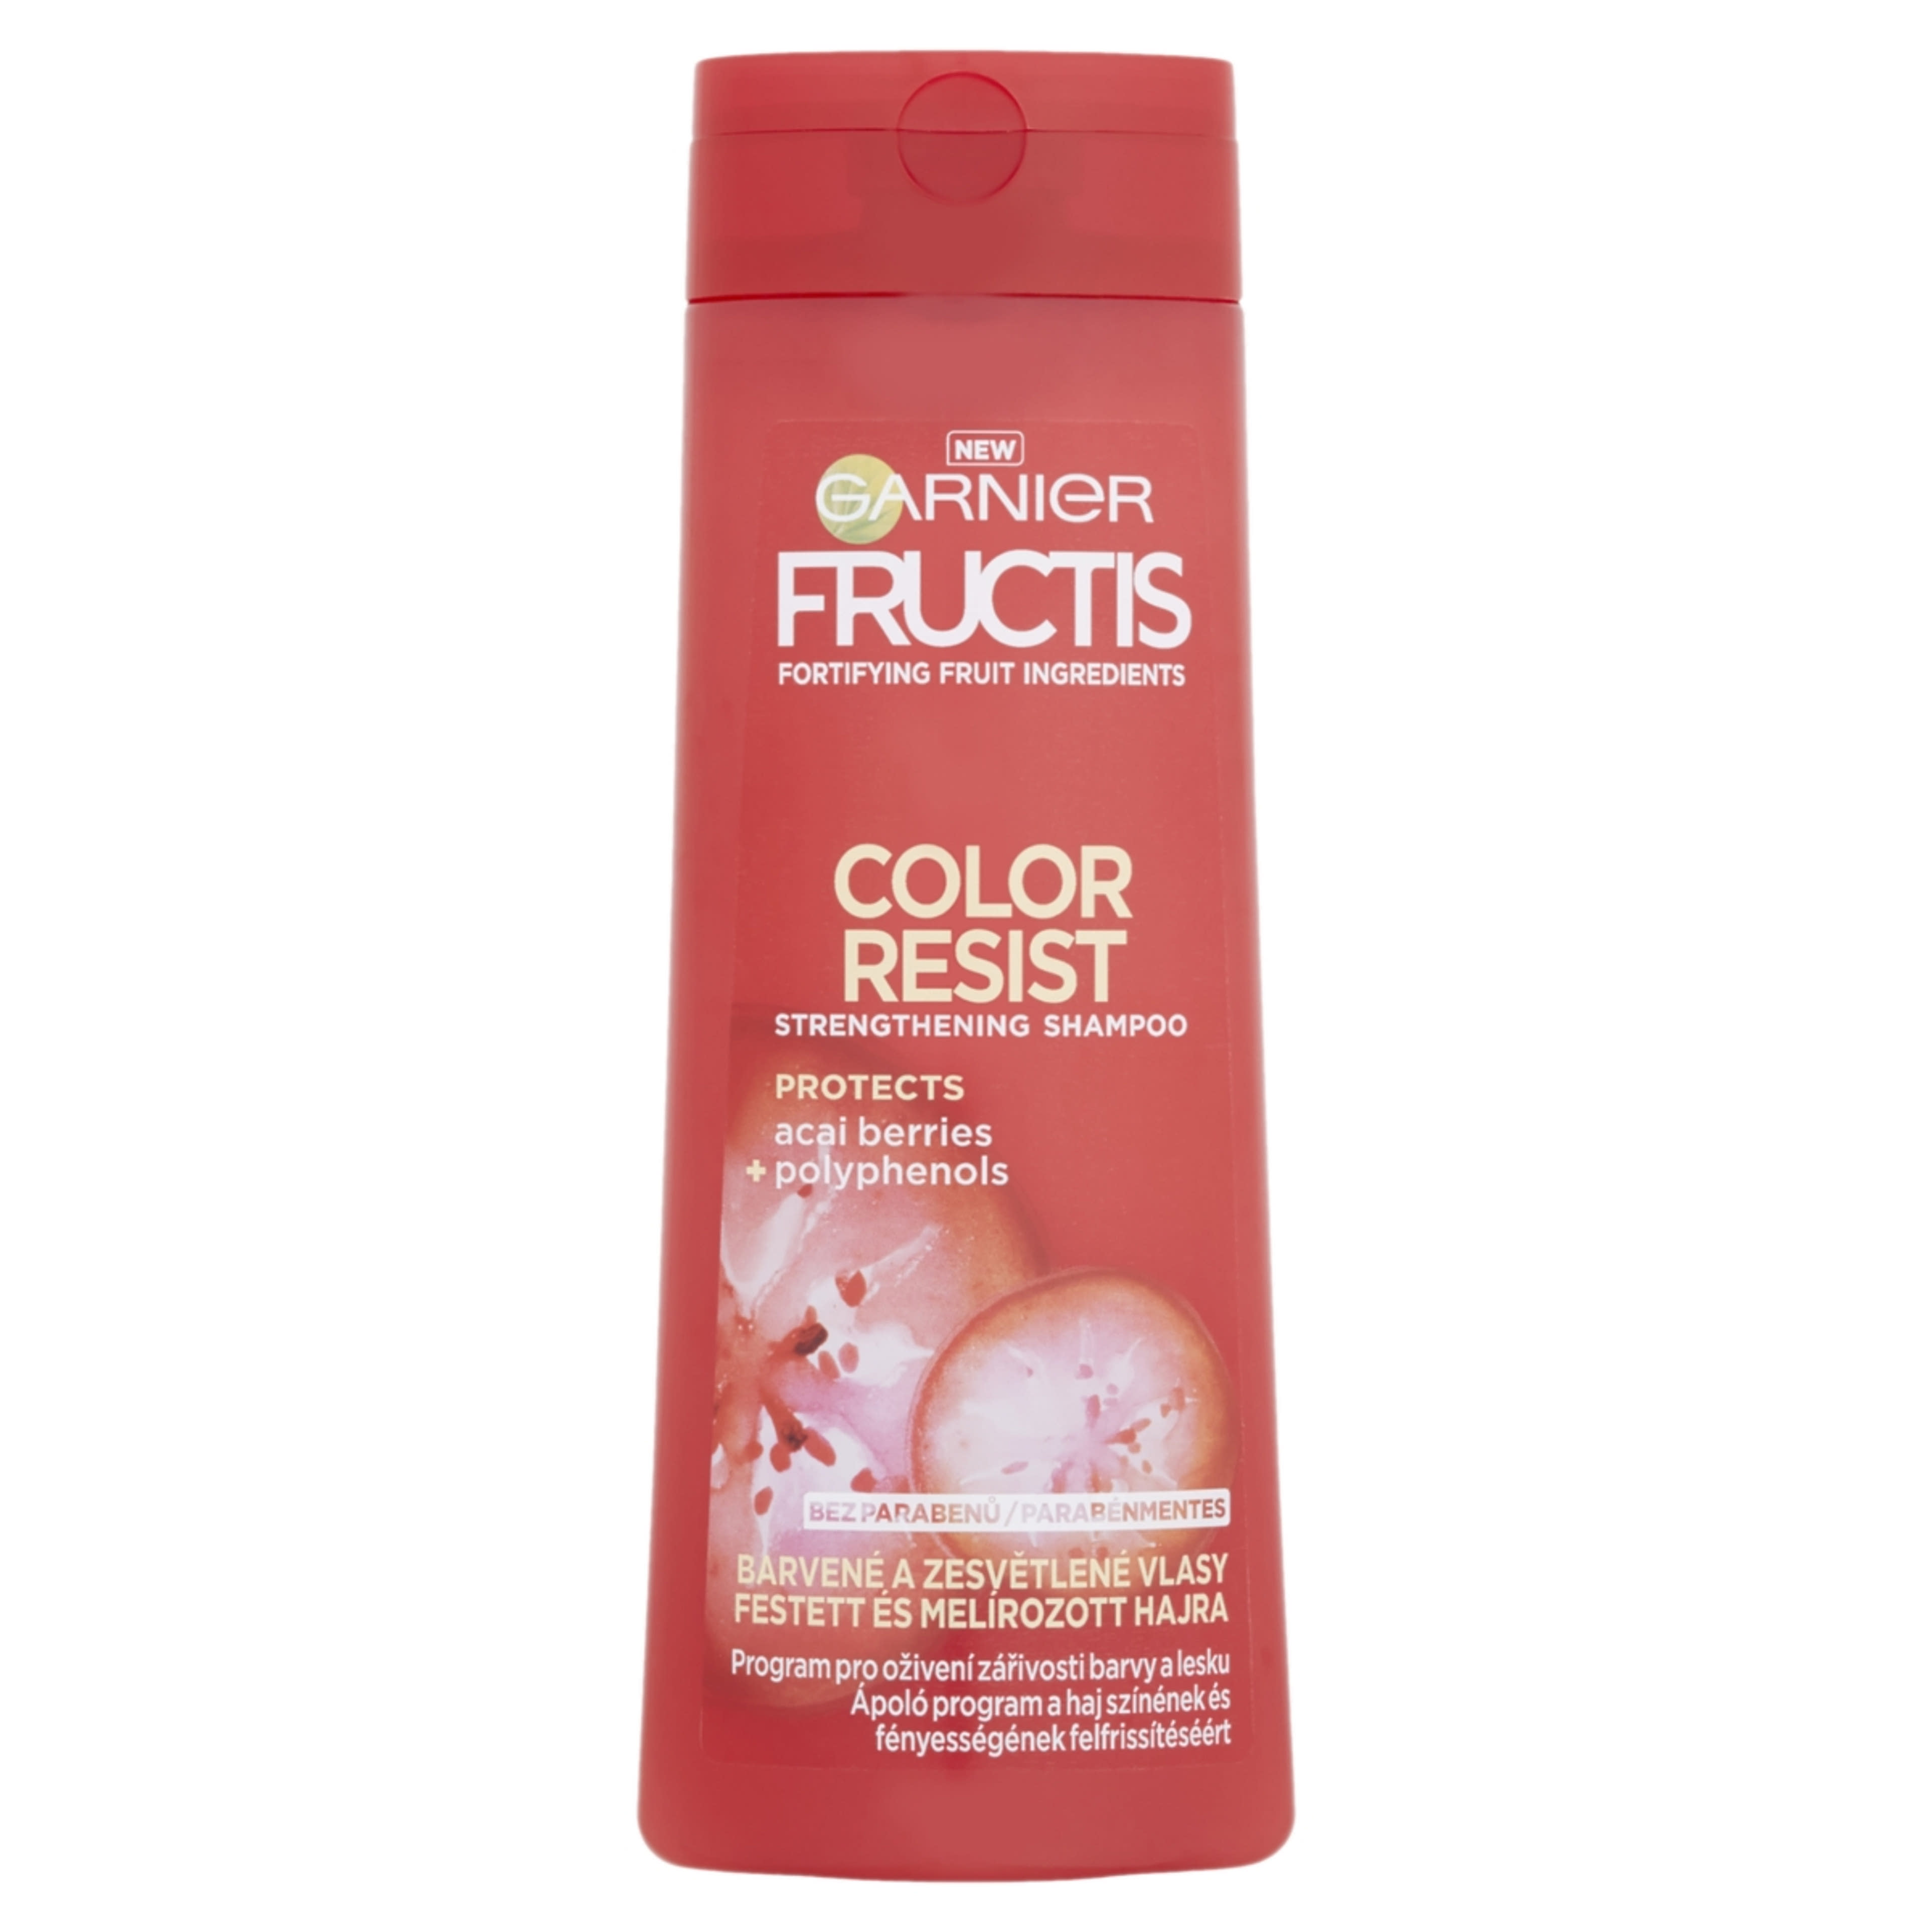 Garnier Fructis Color Resist sampon - 400 ml-1